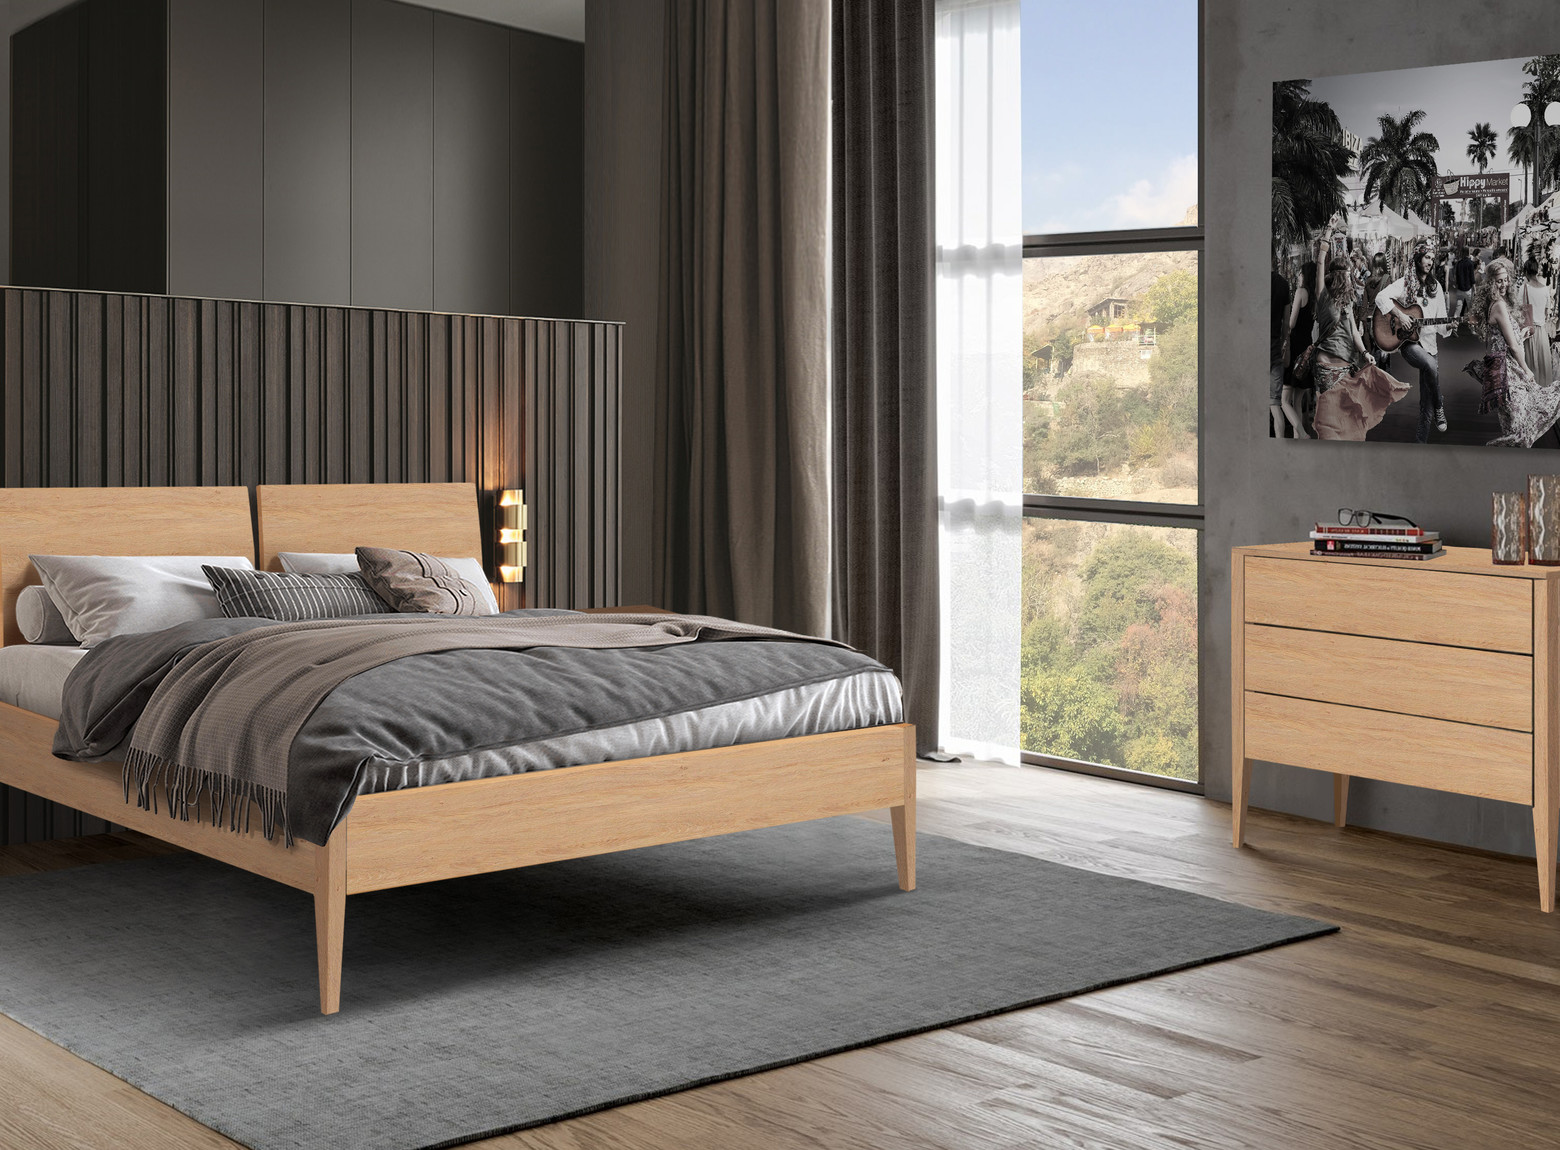 Houten bed Luxe houten bed | Beddenplein - Beddenplein.nl